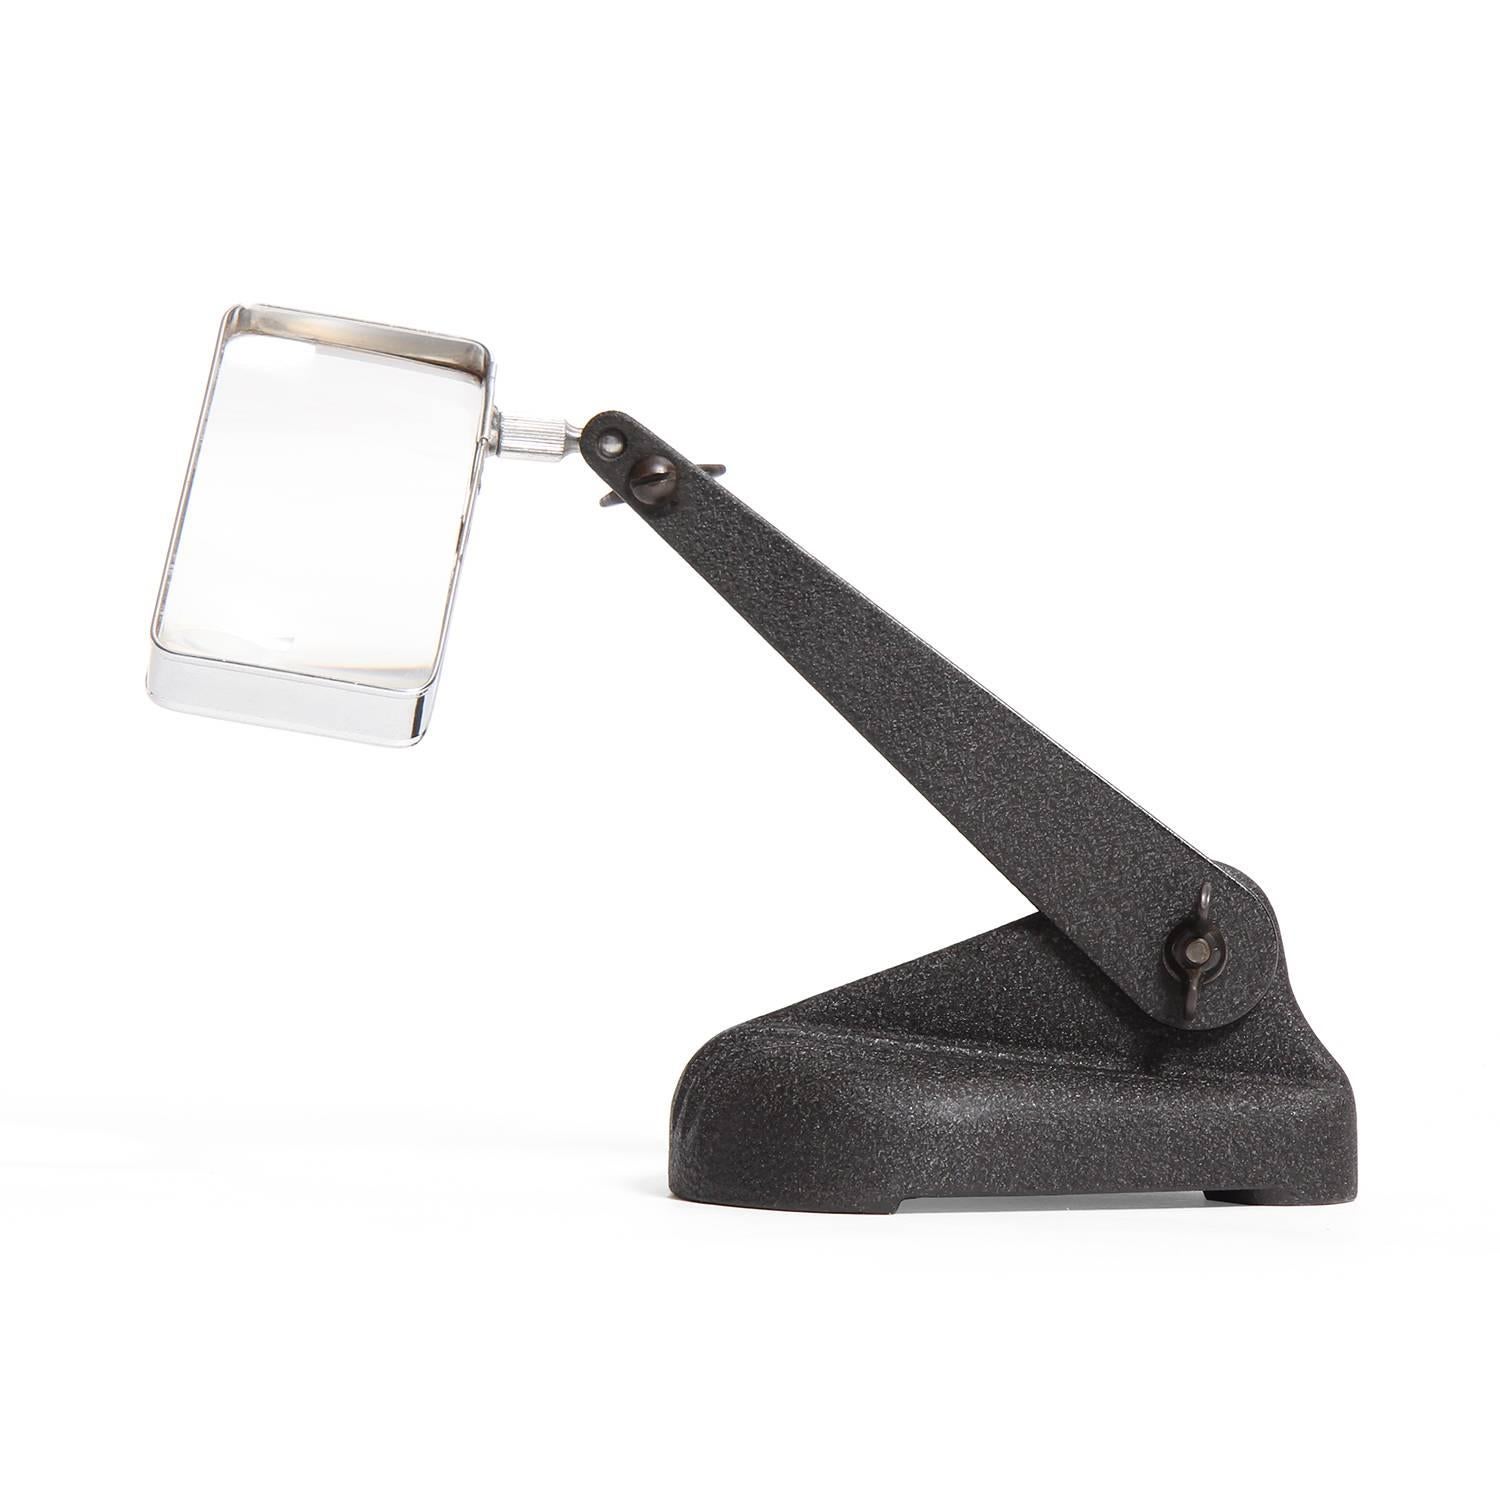 Industrial Desktop Magnifier by Bausch & Lomb